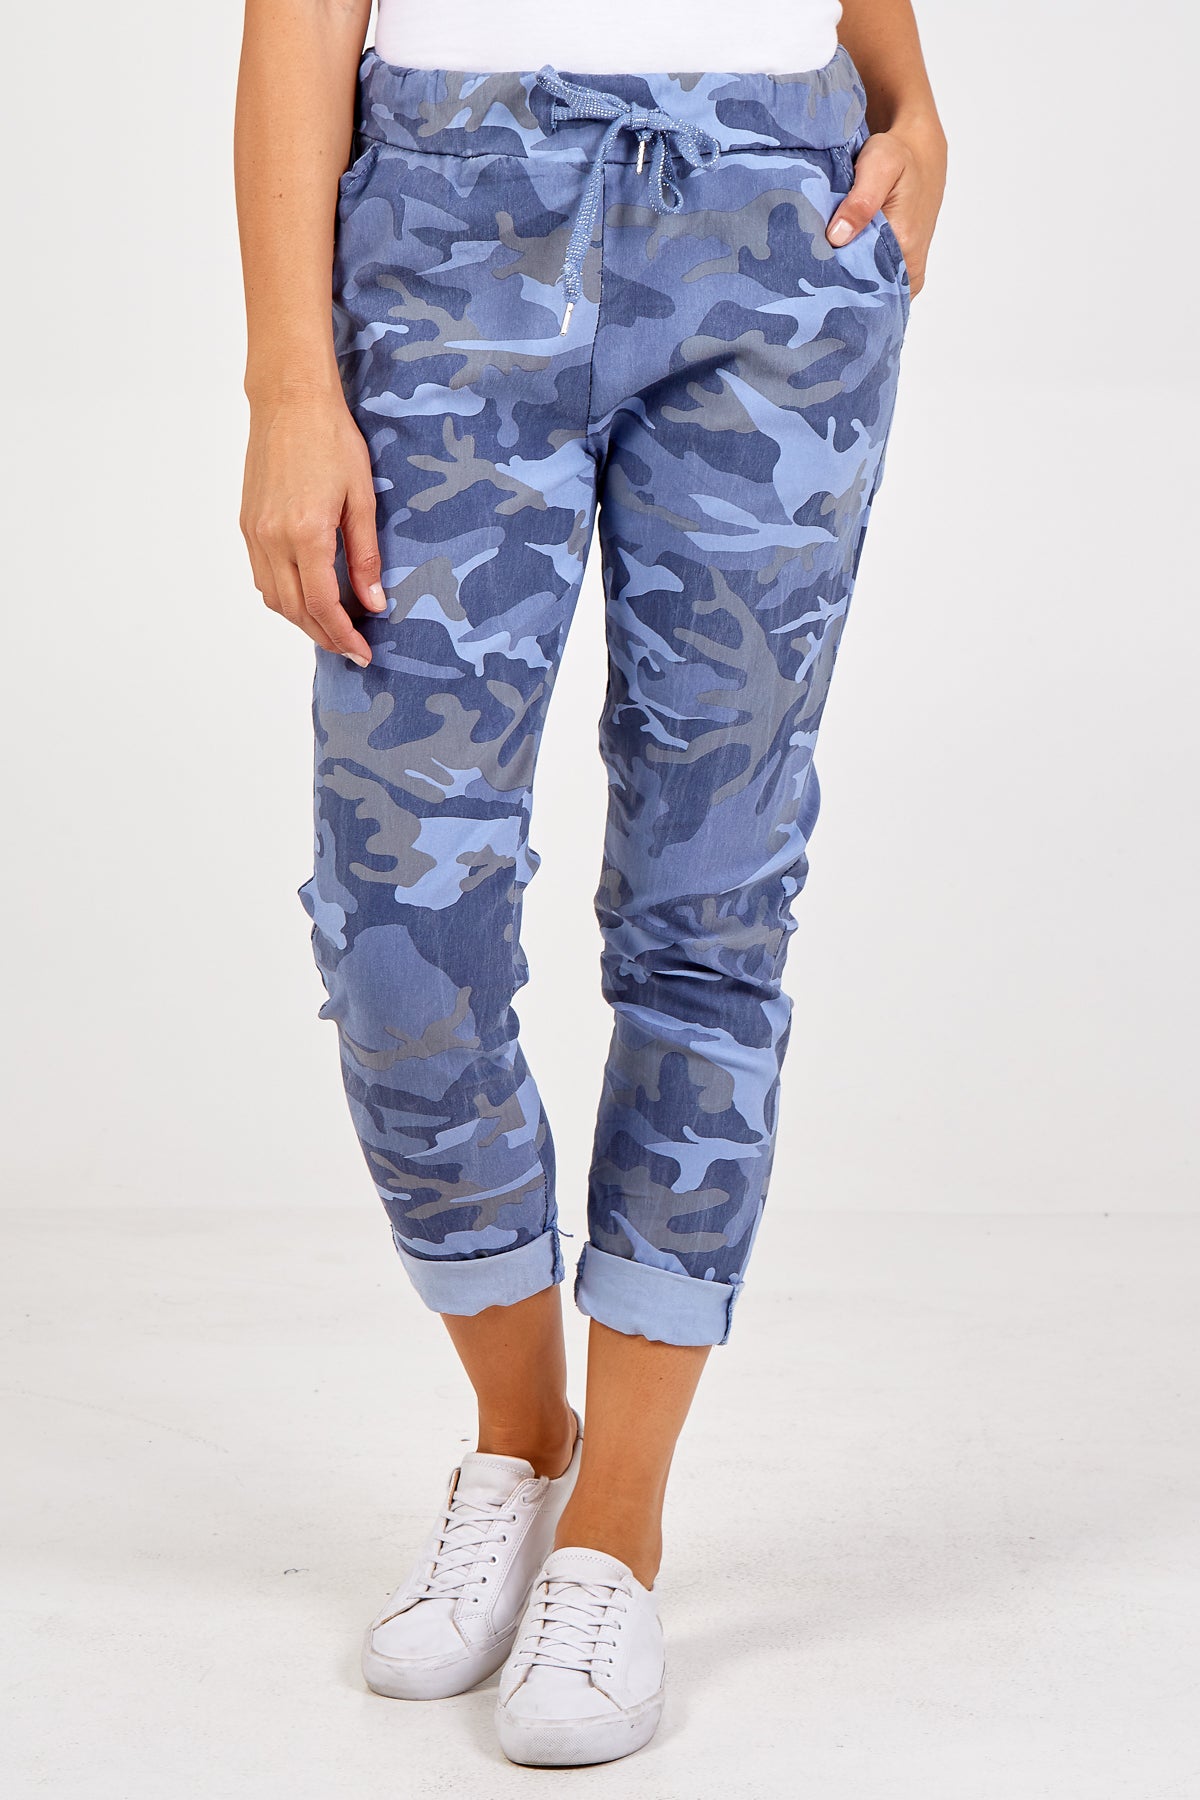 Kombat Blue Urban Black Blue Night Camo Combat Trousers Army Camo Pants  Military Tactical